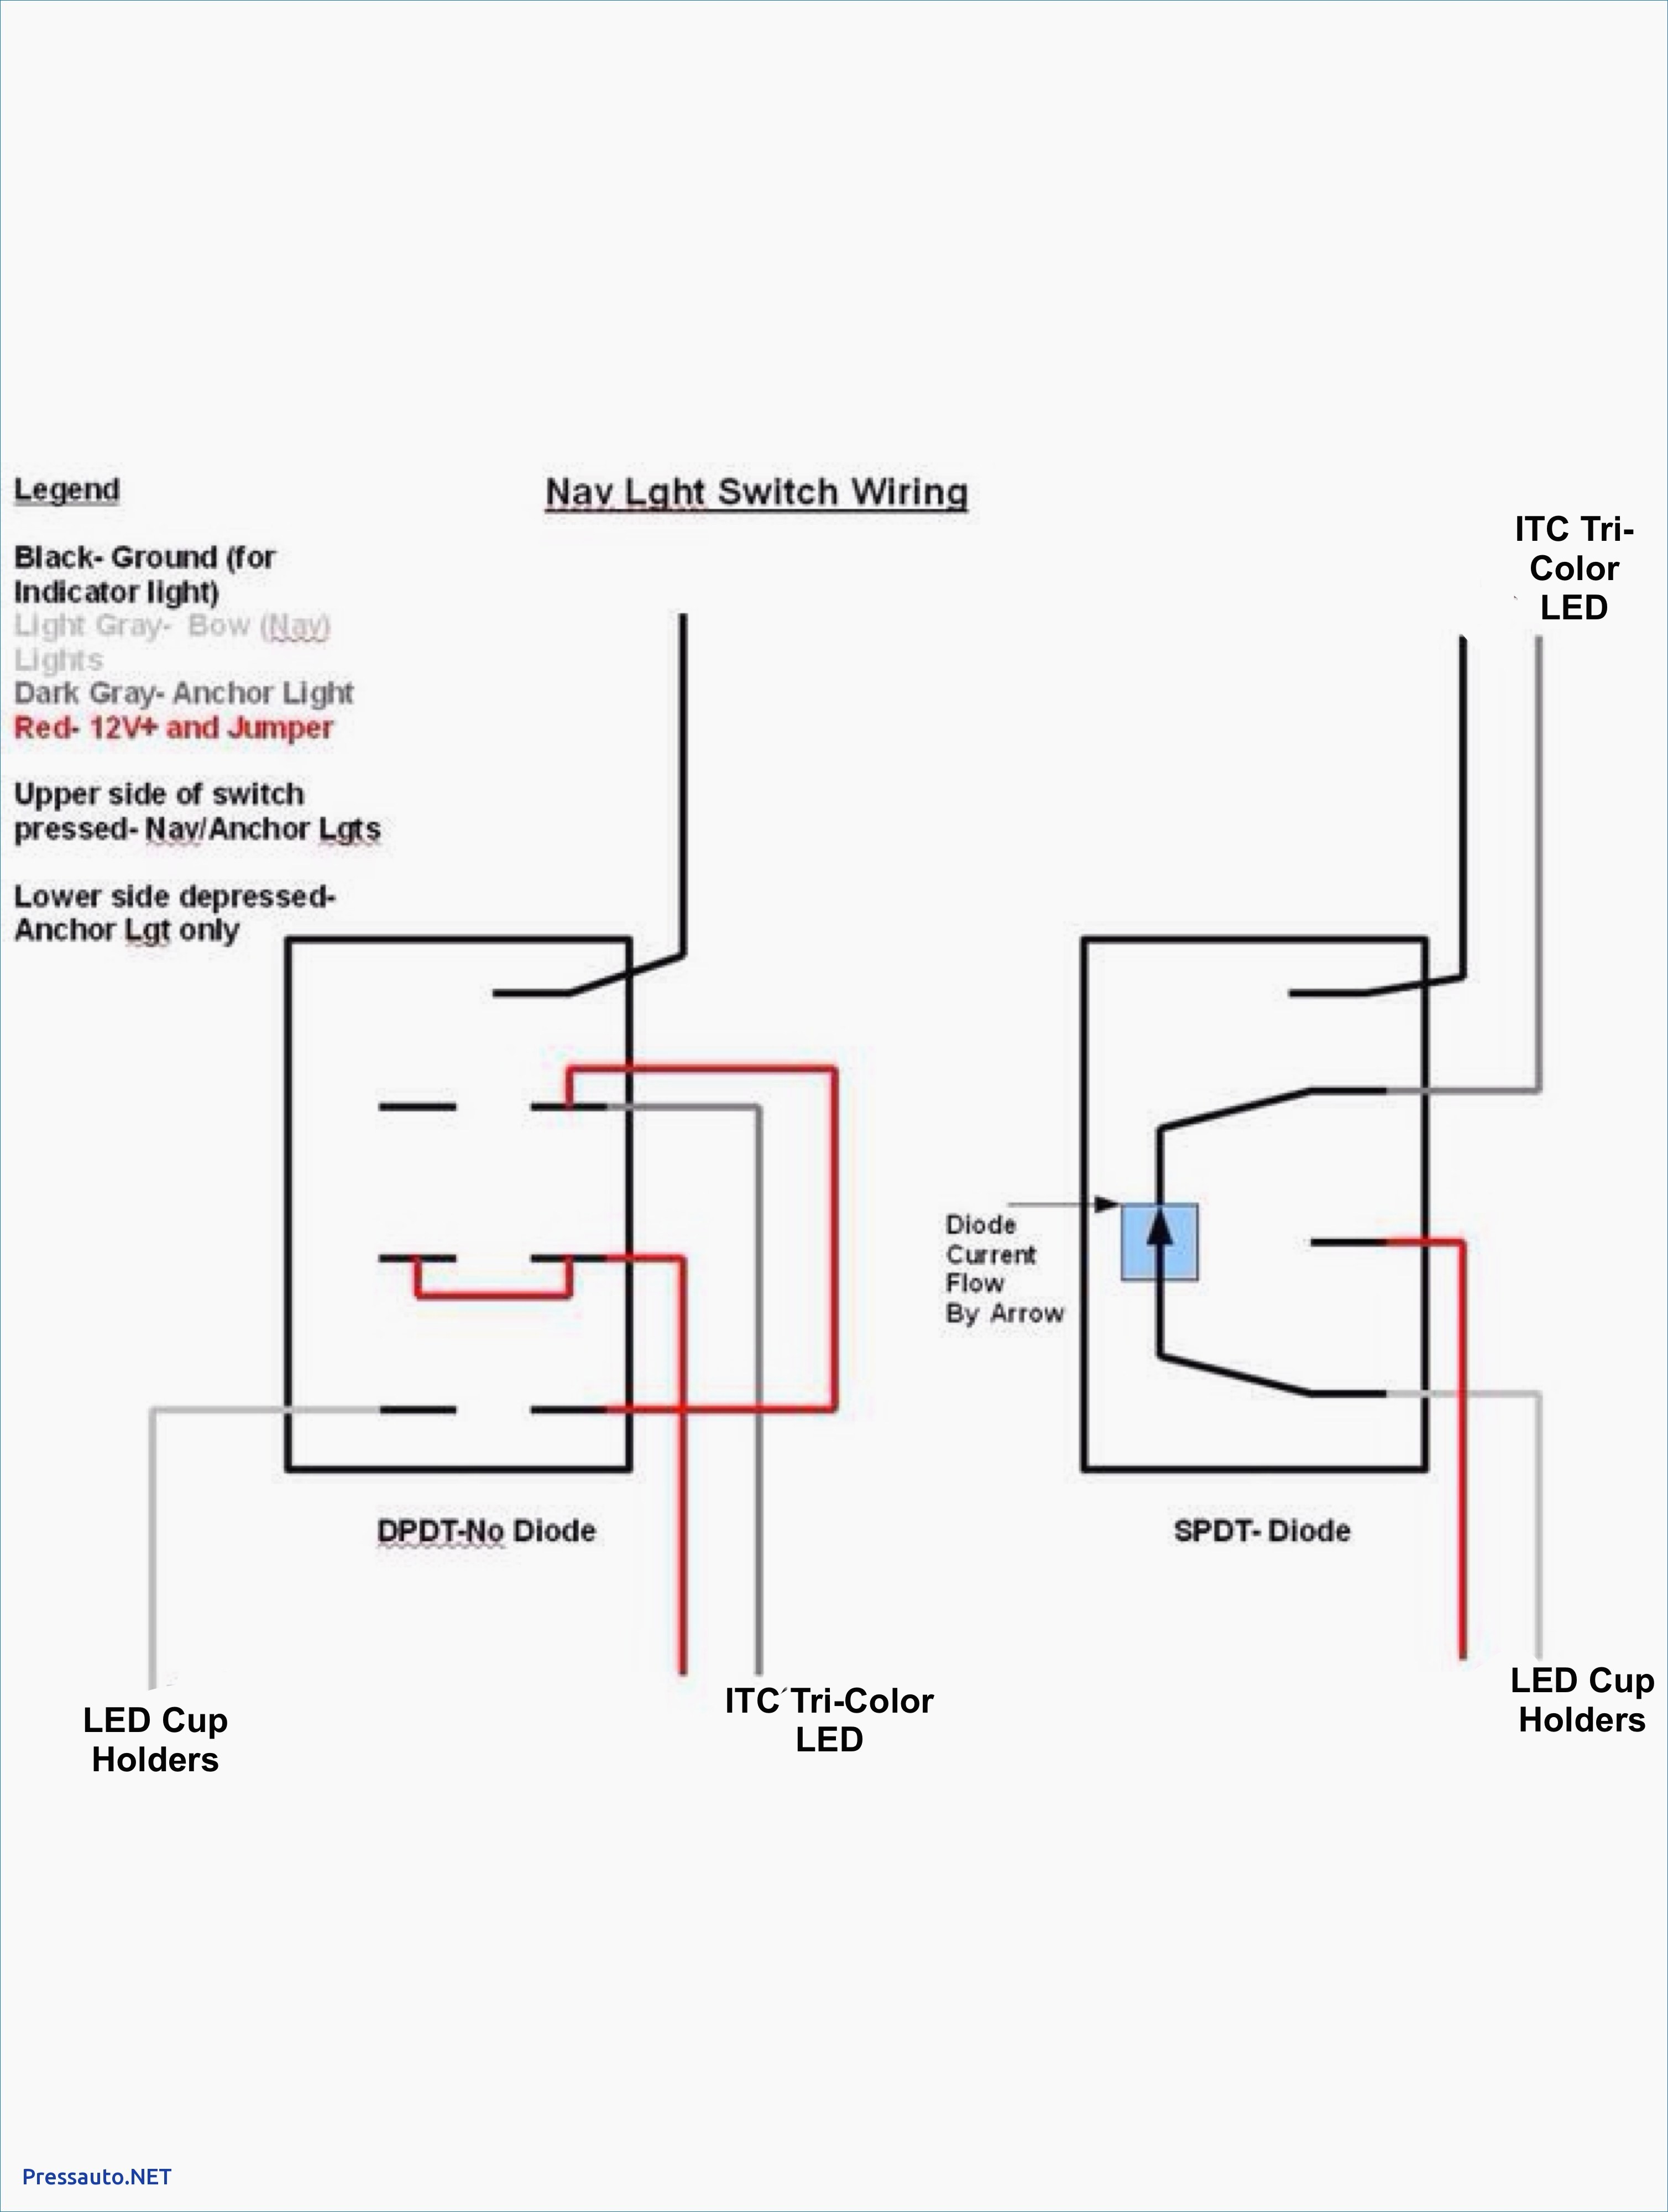 Lighted Rocker Switch Wiring Diagram Illuminated toggle Switch Wiring Diagram Of Lighted Rocker Switch Wiring Diagram